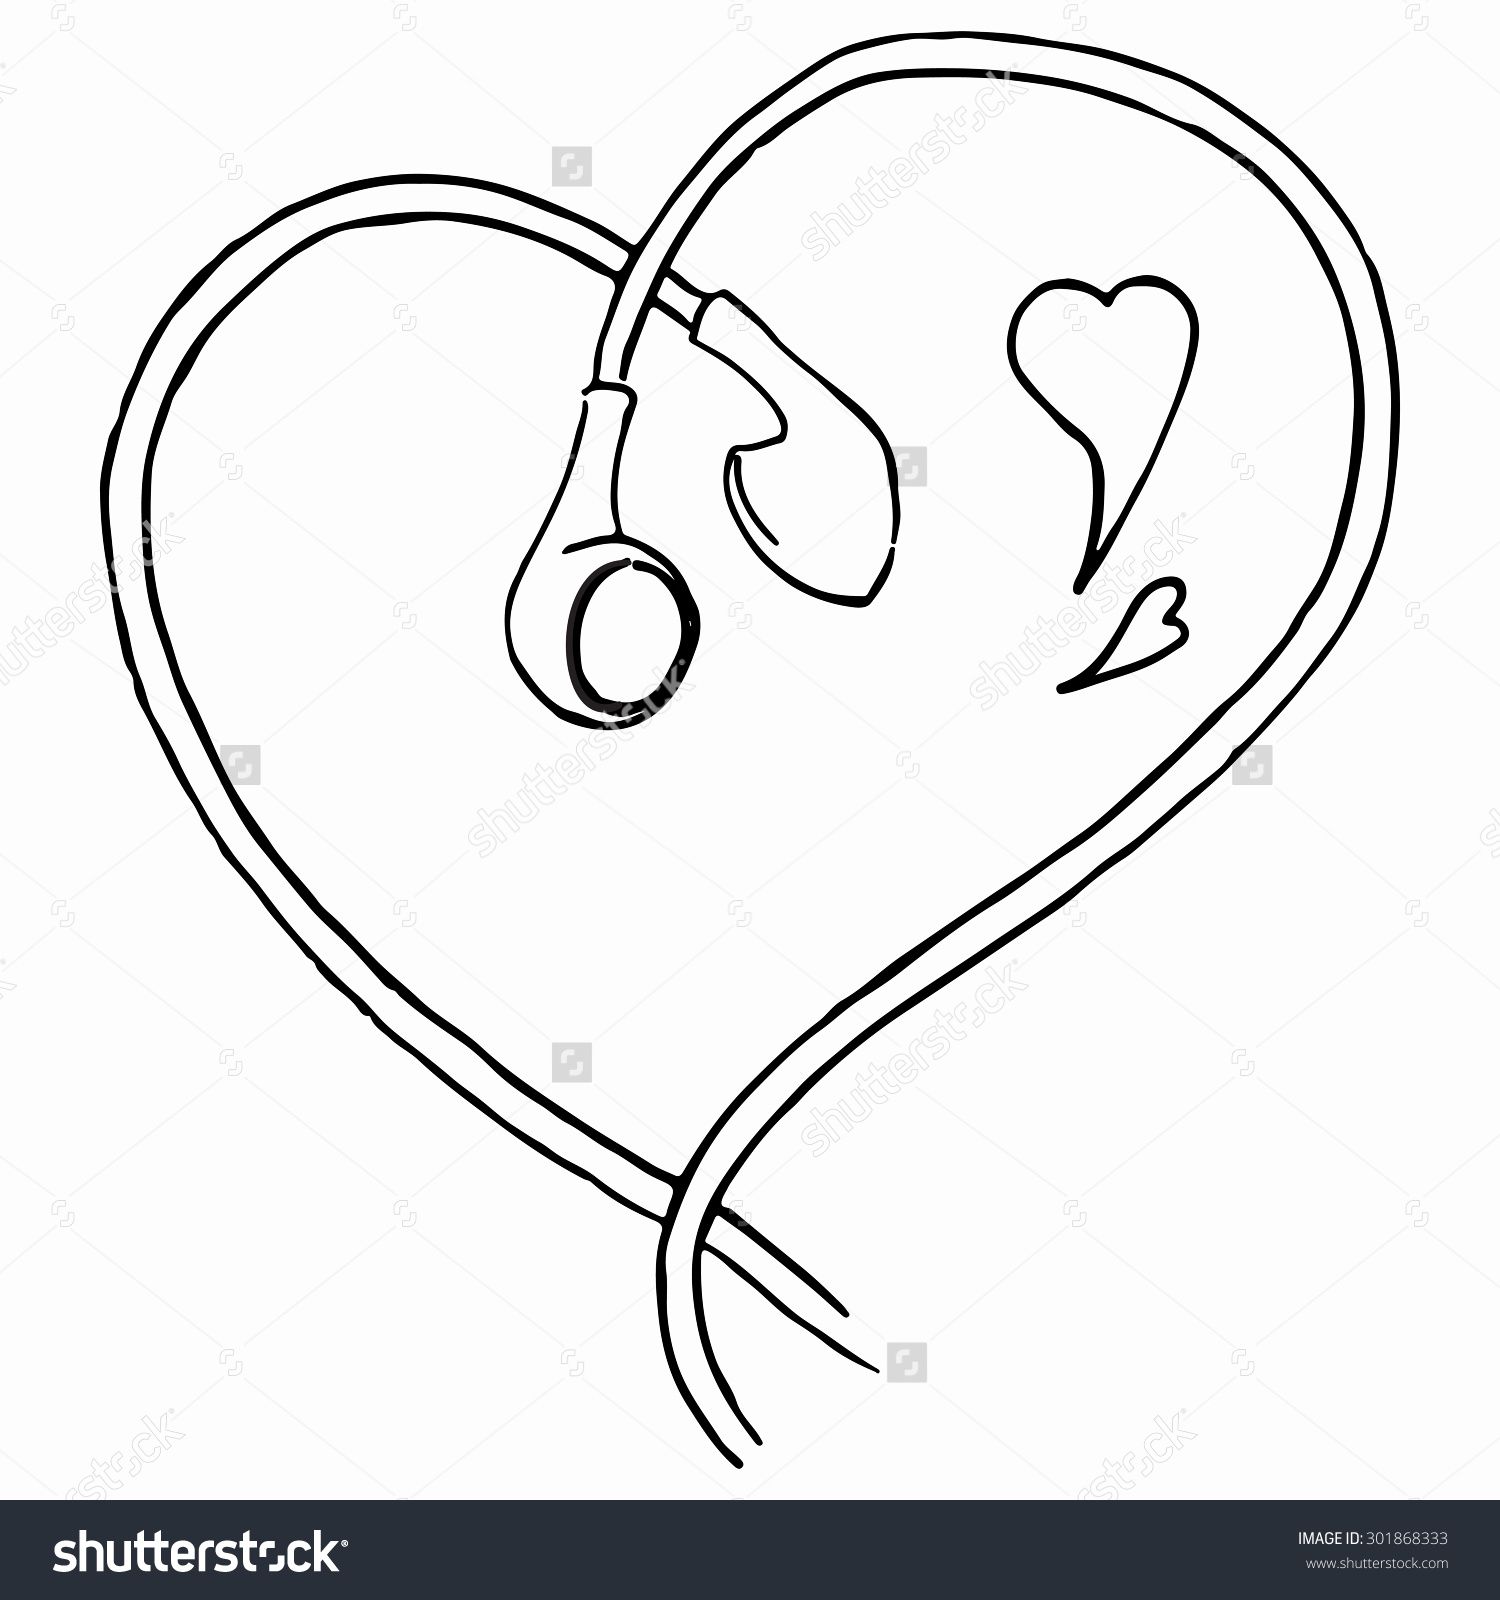 Featured image of post Earphones Drawing Images Vector retro hand drawn doodle headphones earphones with heart